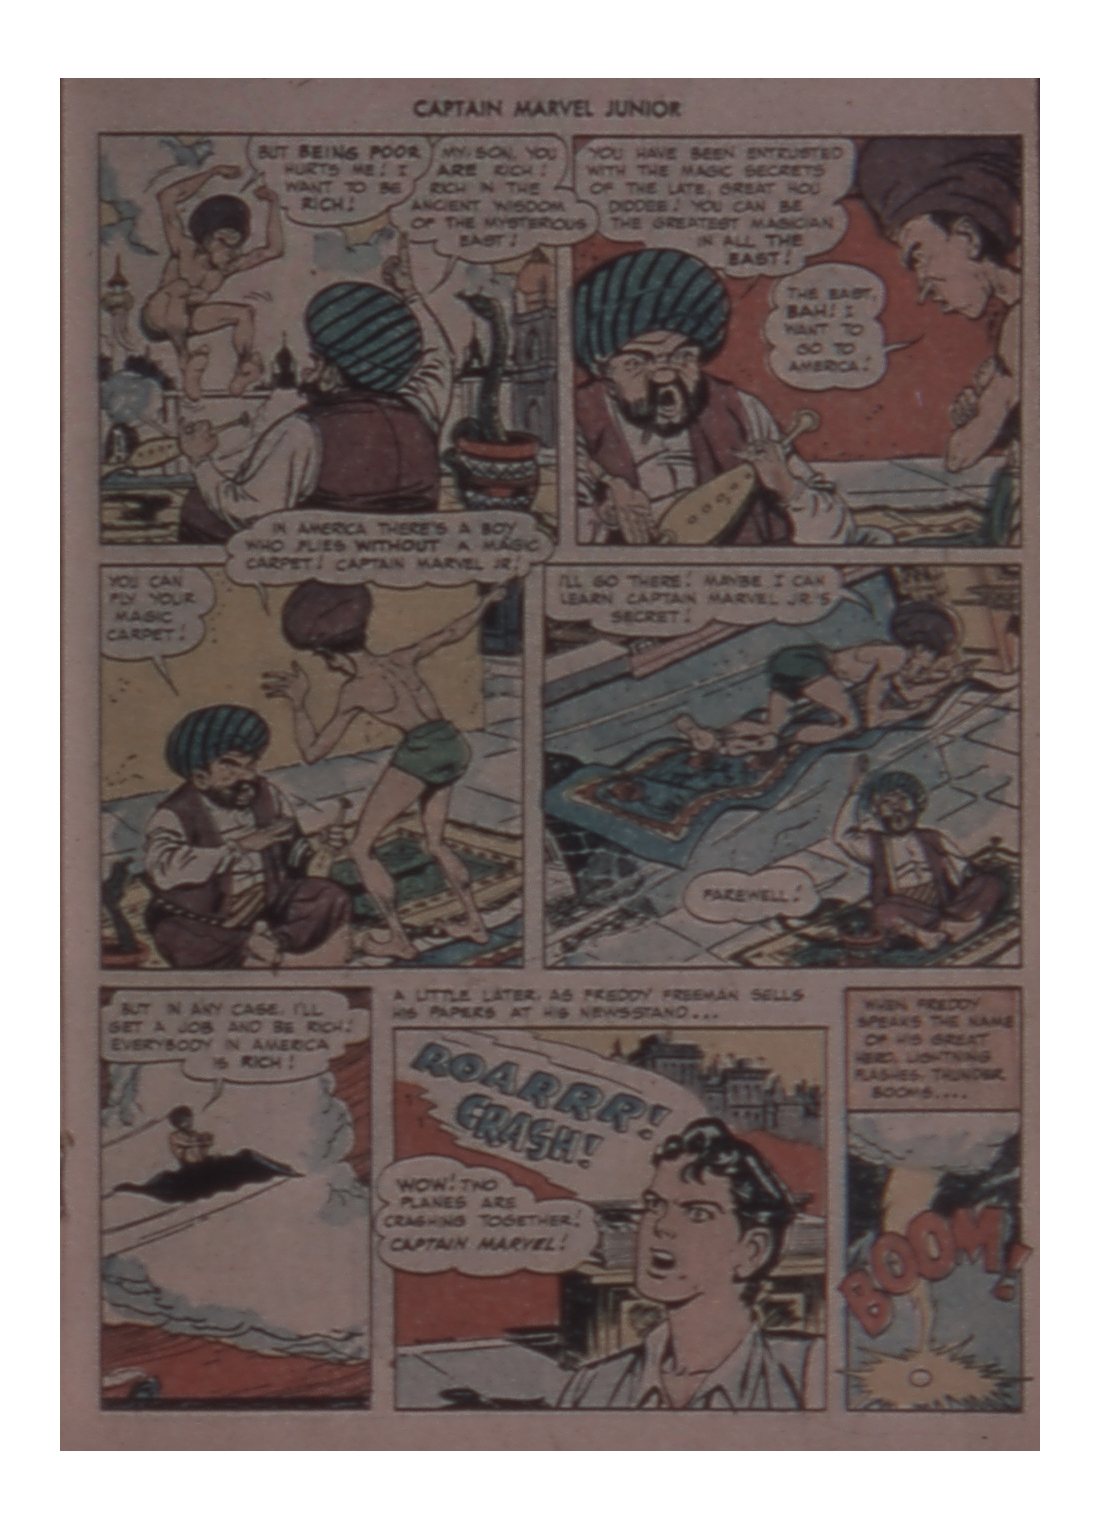 Read online Captain Marvel, Jr. comic -  Issue #73 - 27